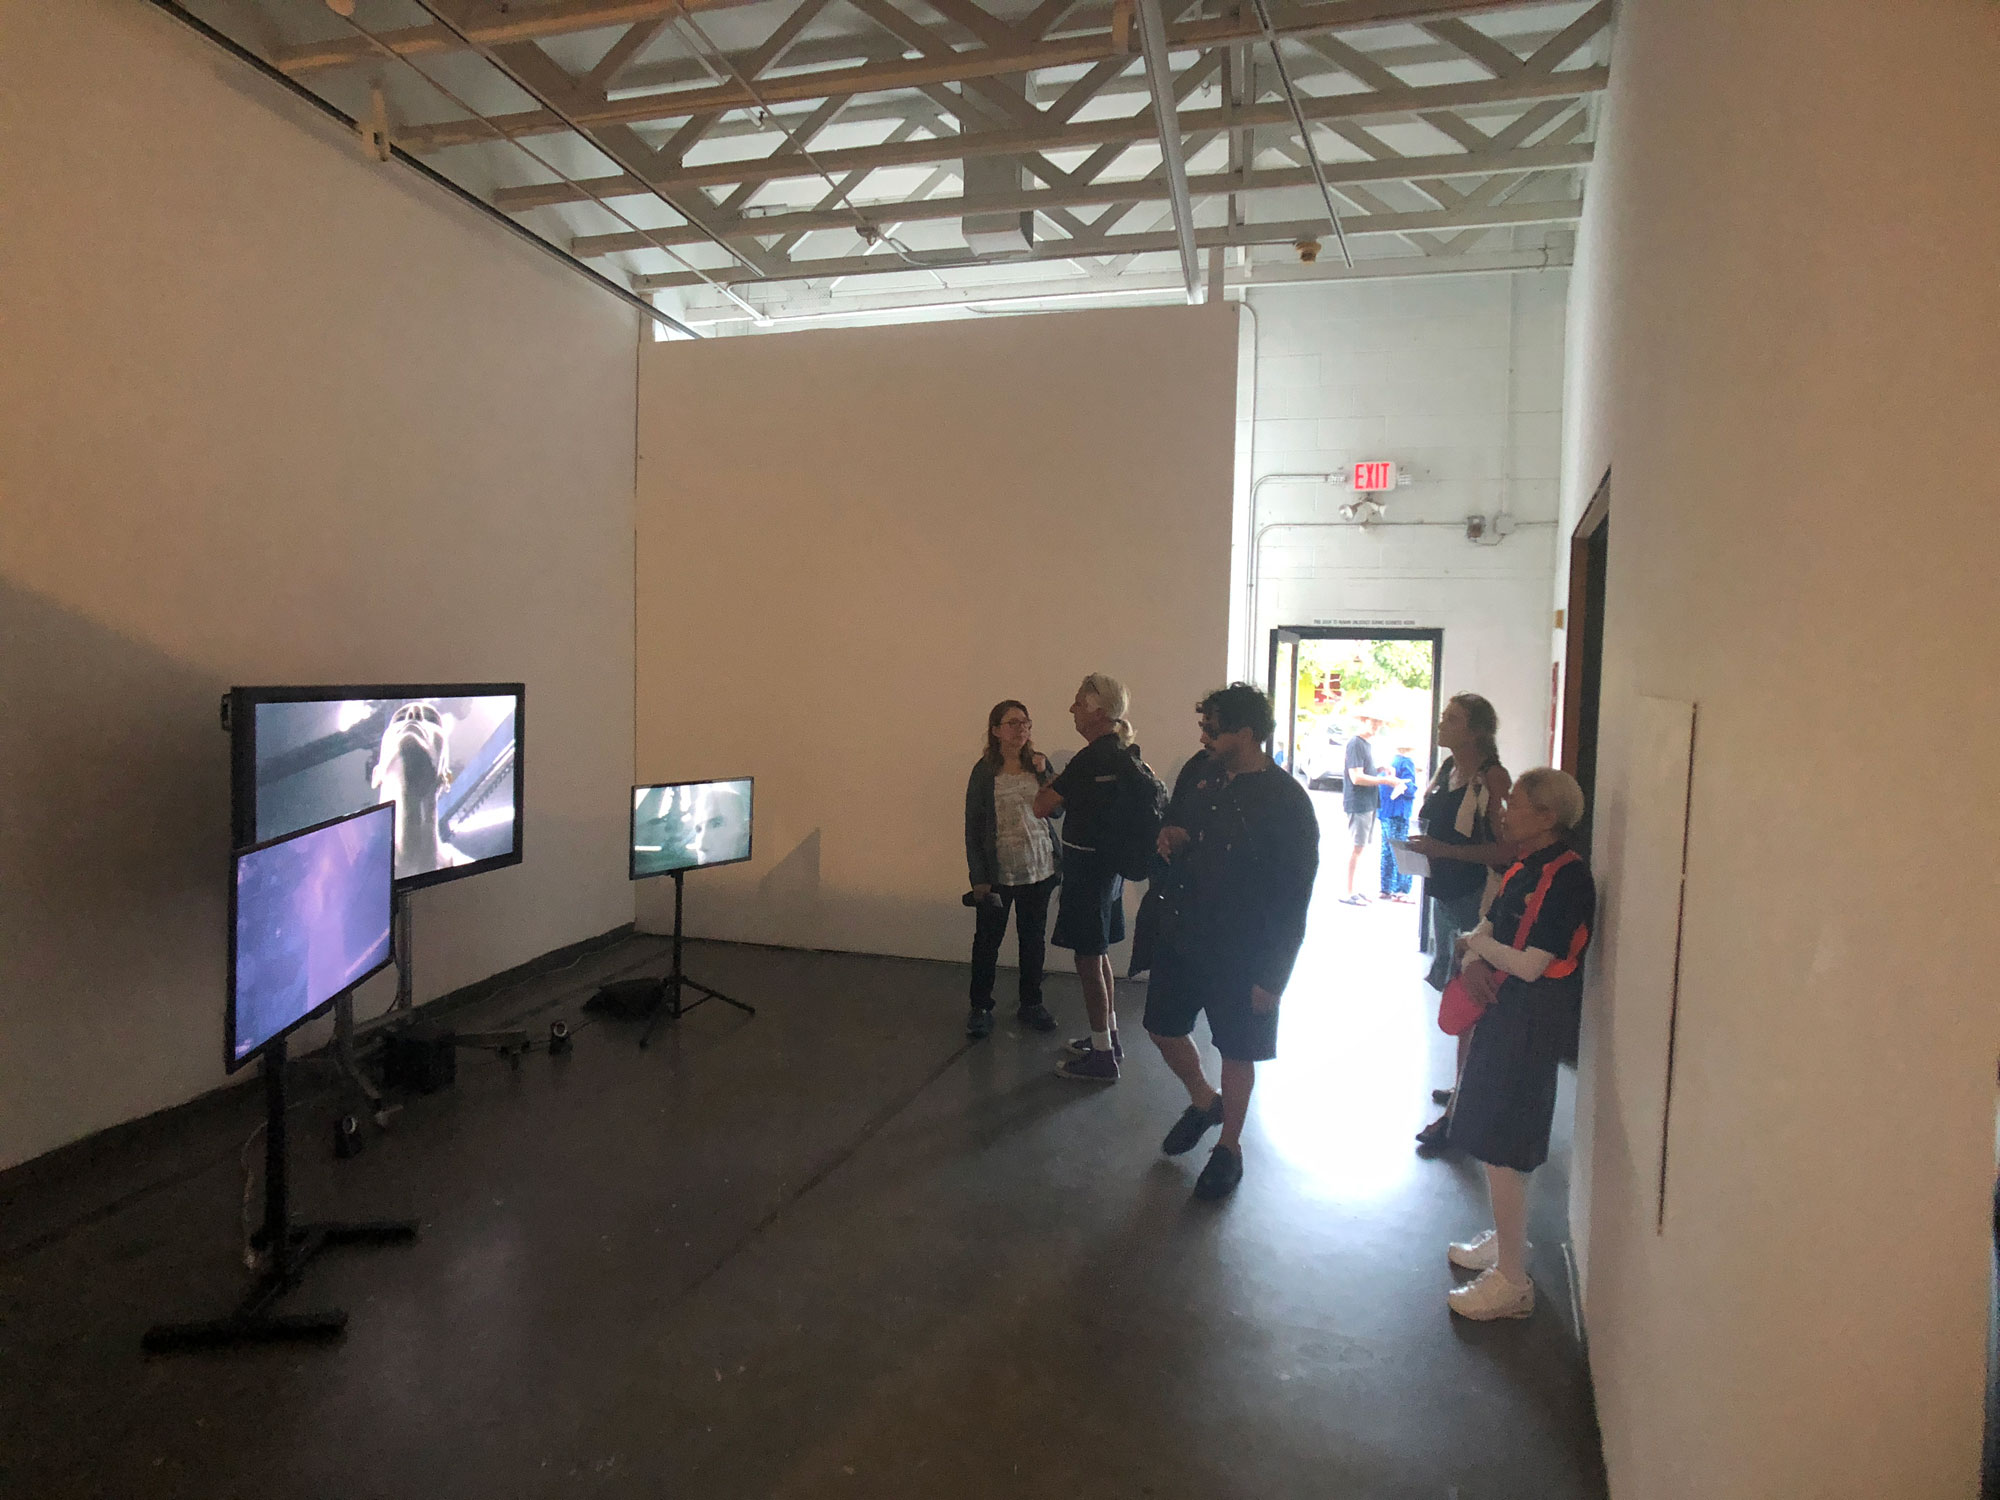 The 18th Street in Santa Monica arranged an open studio showcasing artworks by Su Hui Yu in Sep 2019